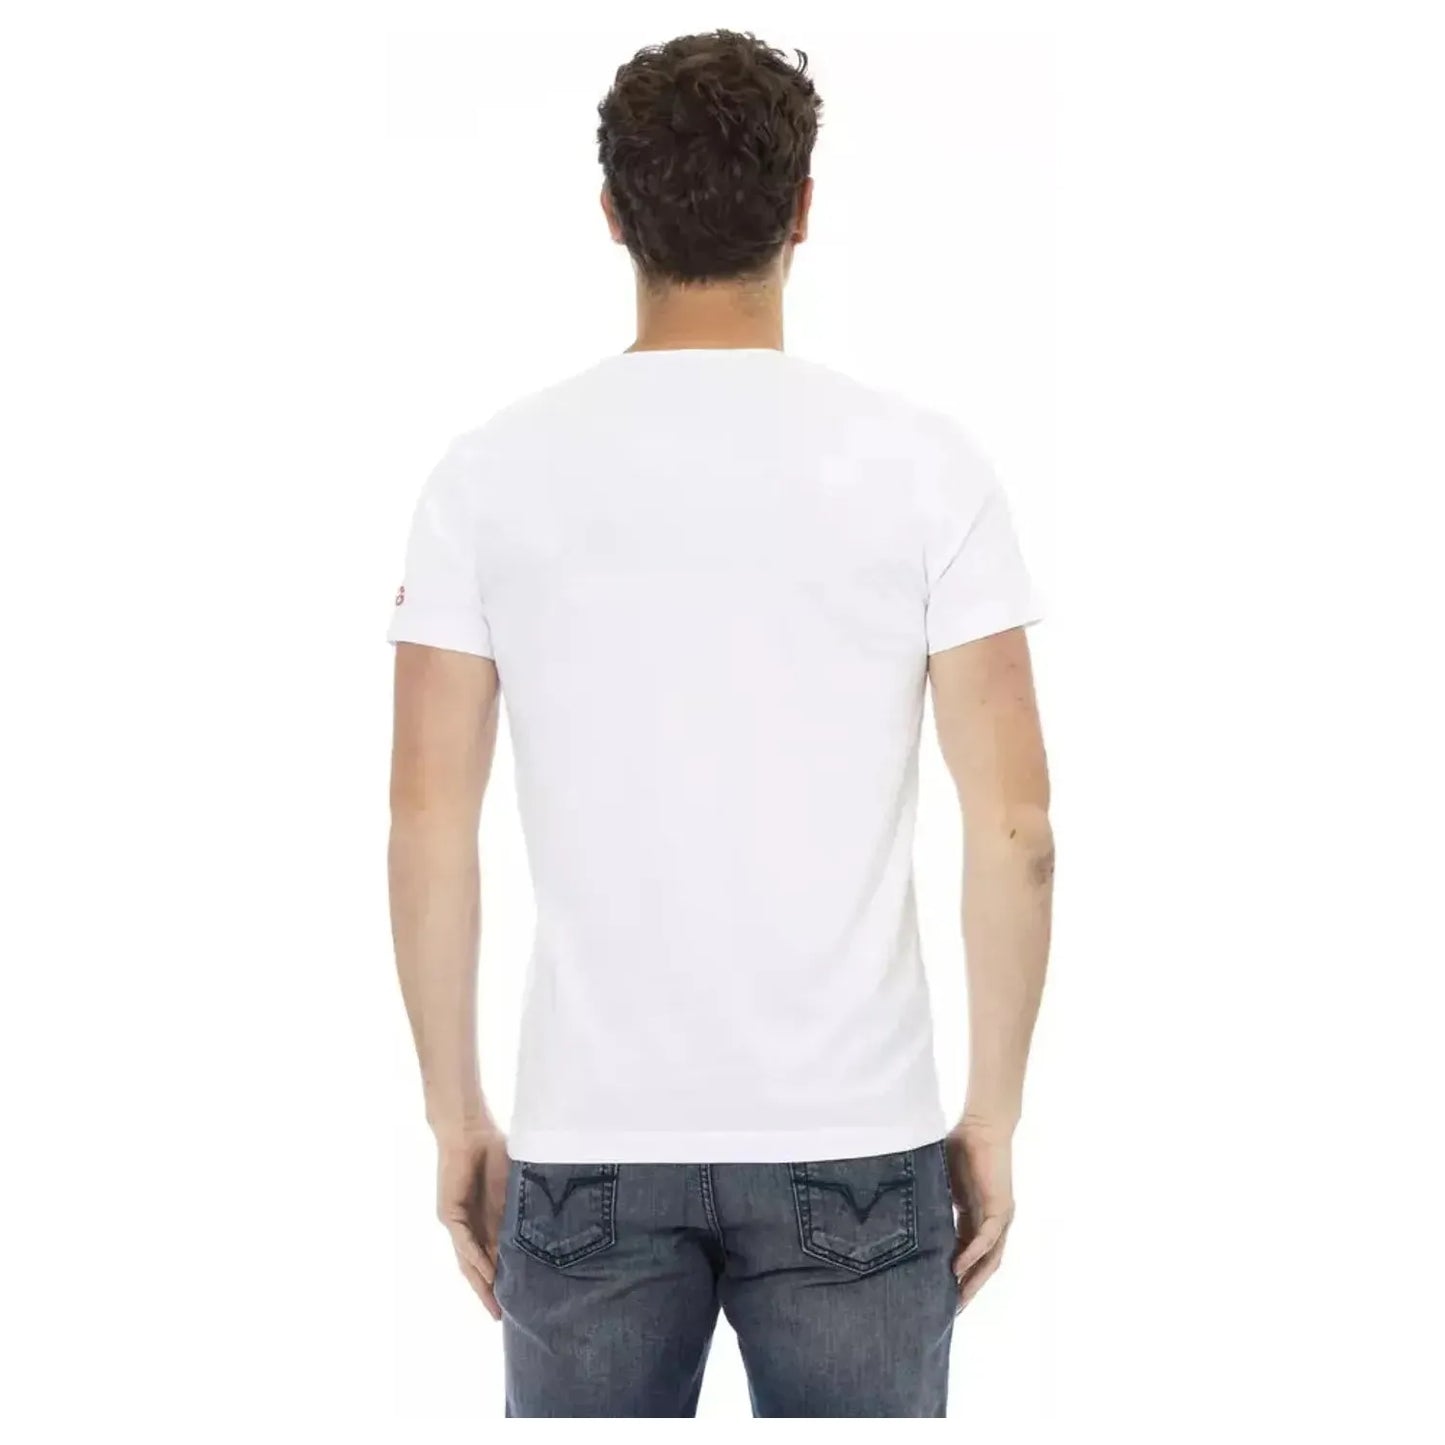 Trussardi Action Elegant White Short Sleeve Tee with Front Print white-cotton-t-shirt-96